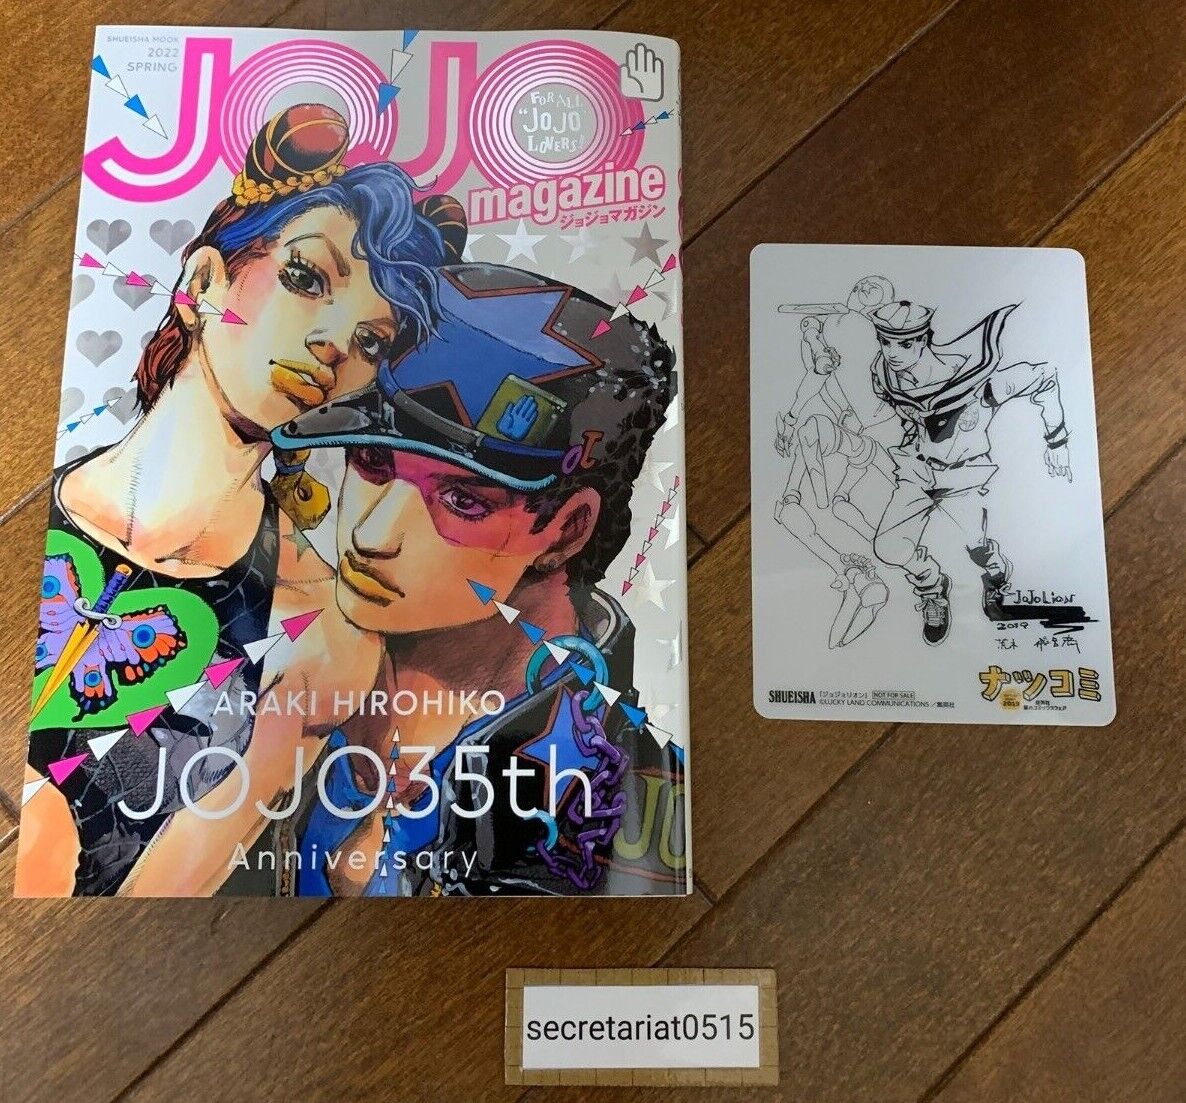 Jojo Magazine 2022 Spring w/ Jojolion Plastic Card Autographed By Hirohiko Araki